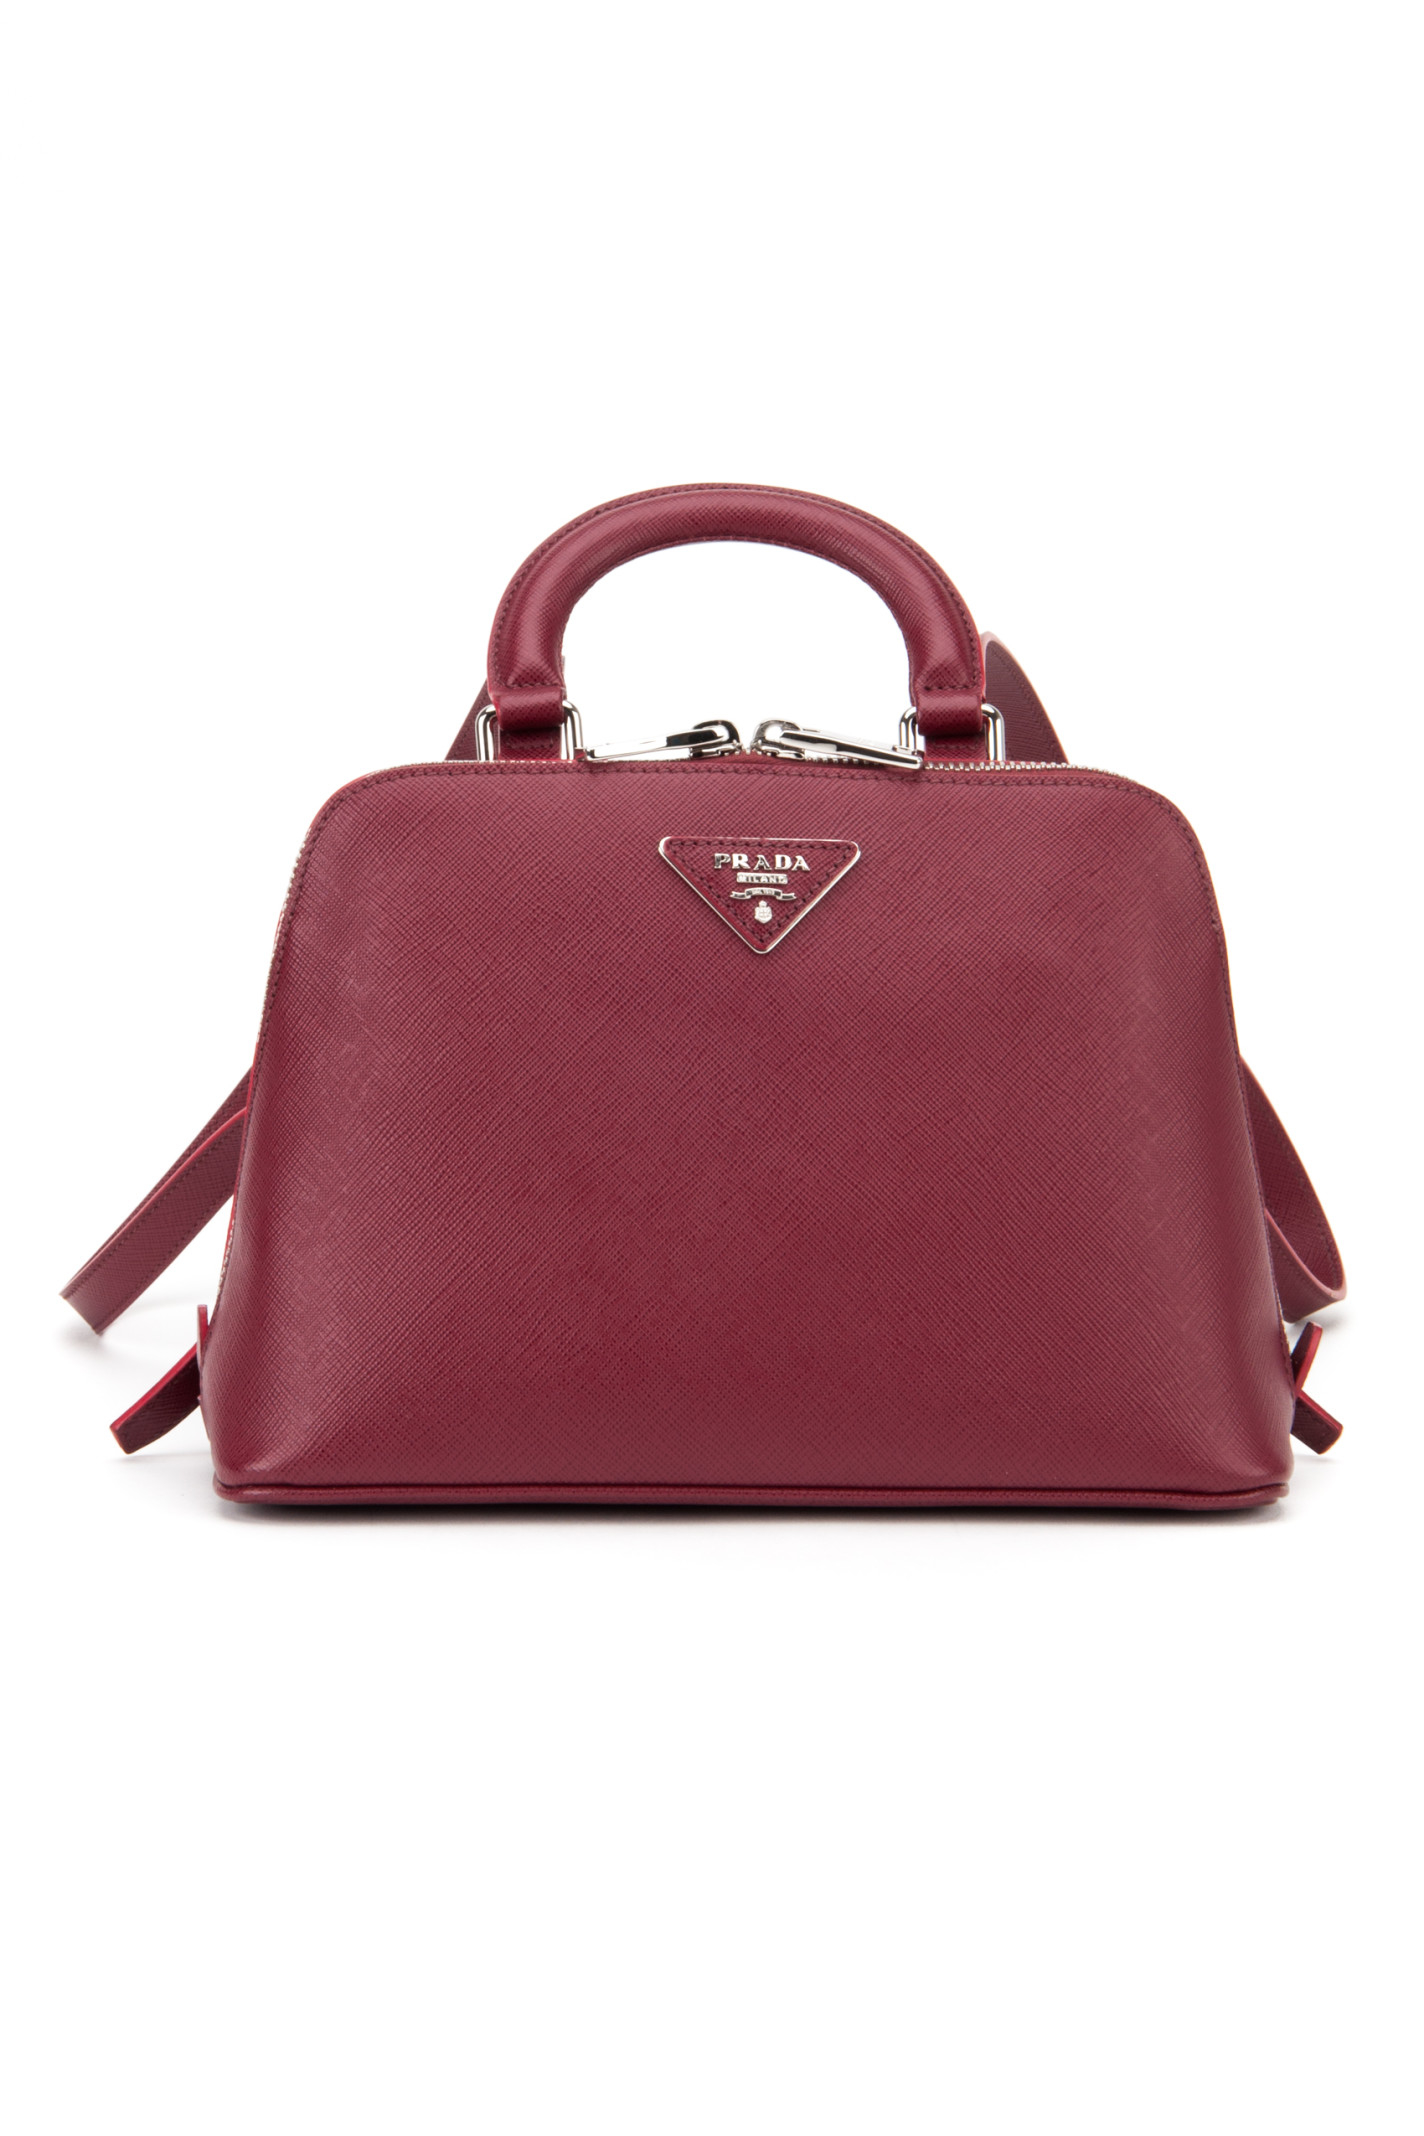 Prada Lux Saffiano Bag in Red (CERISE R) | Lyst  